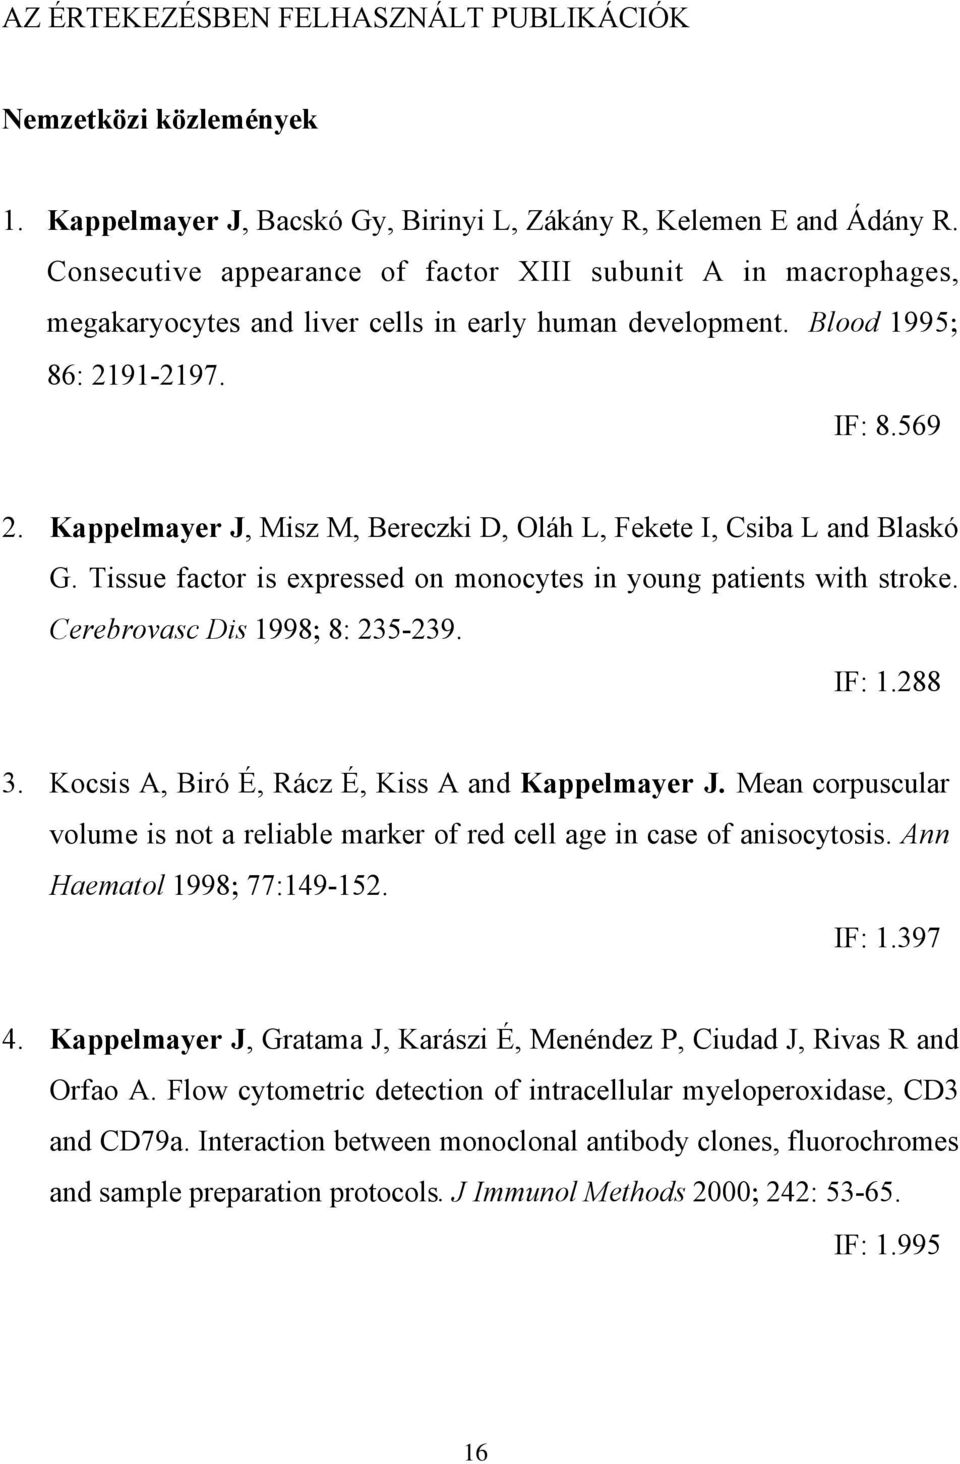 Kappelmayer J, Misz M, Bereczki D, Oláh L, Fekete I, Csiba L and Blaskó G. Tissue factor is expressed on monocytes in young patients with stroke. Cerebrovasc Dis 1998; 8: 235-239. IF: 1.288 3.